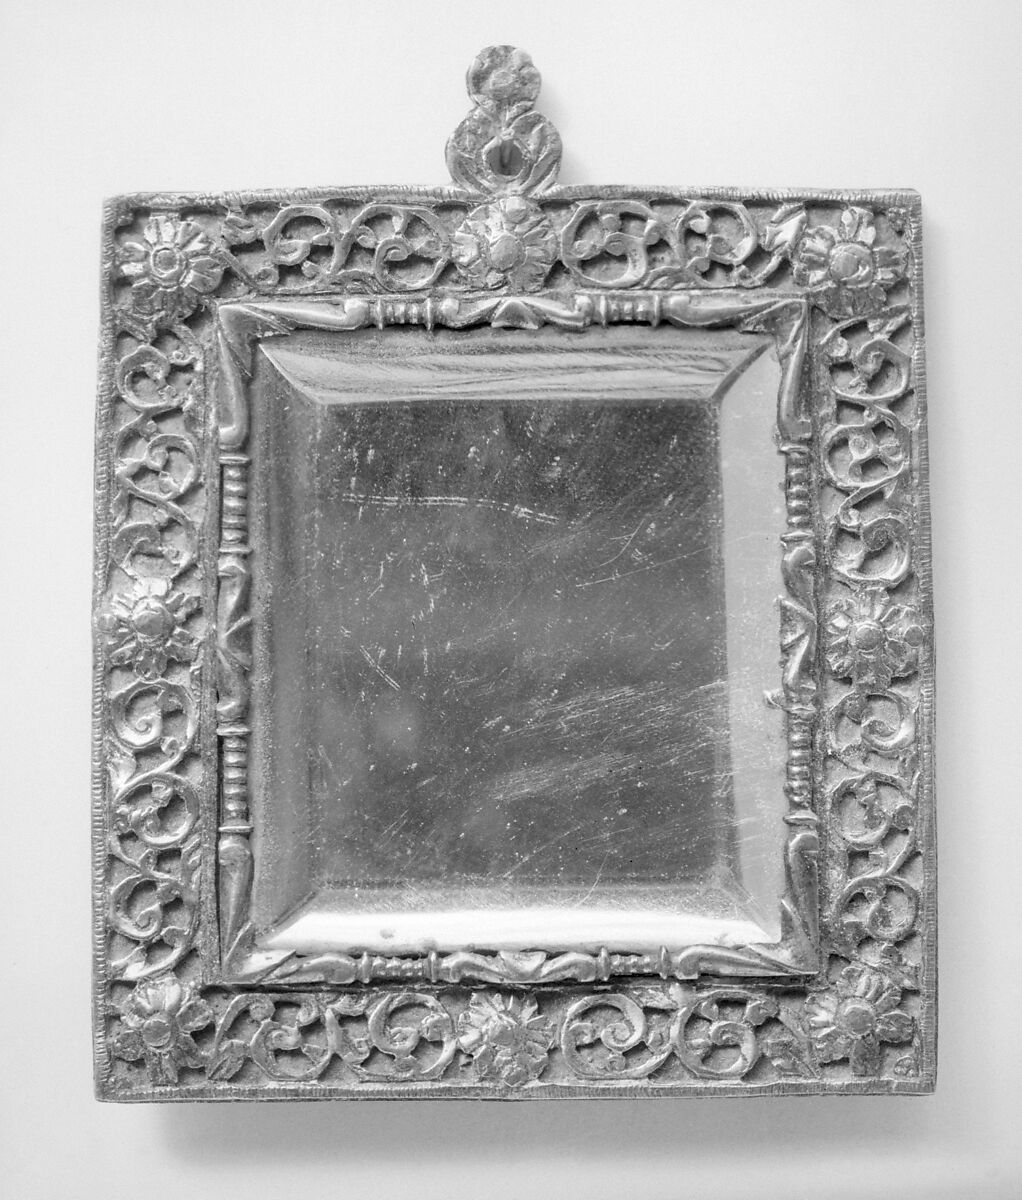 Mirror, Silver, glass, possibly Italian 